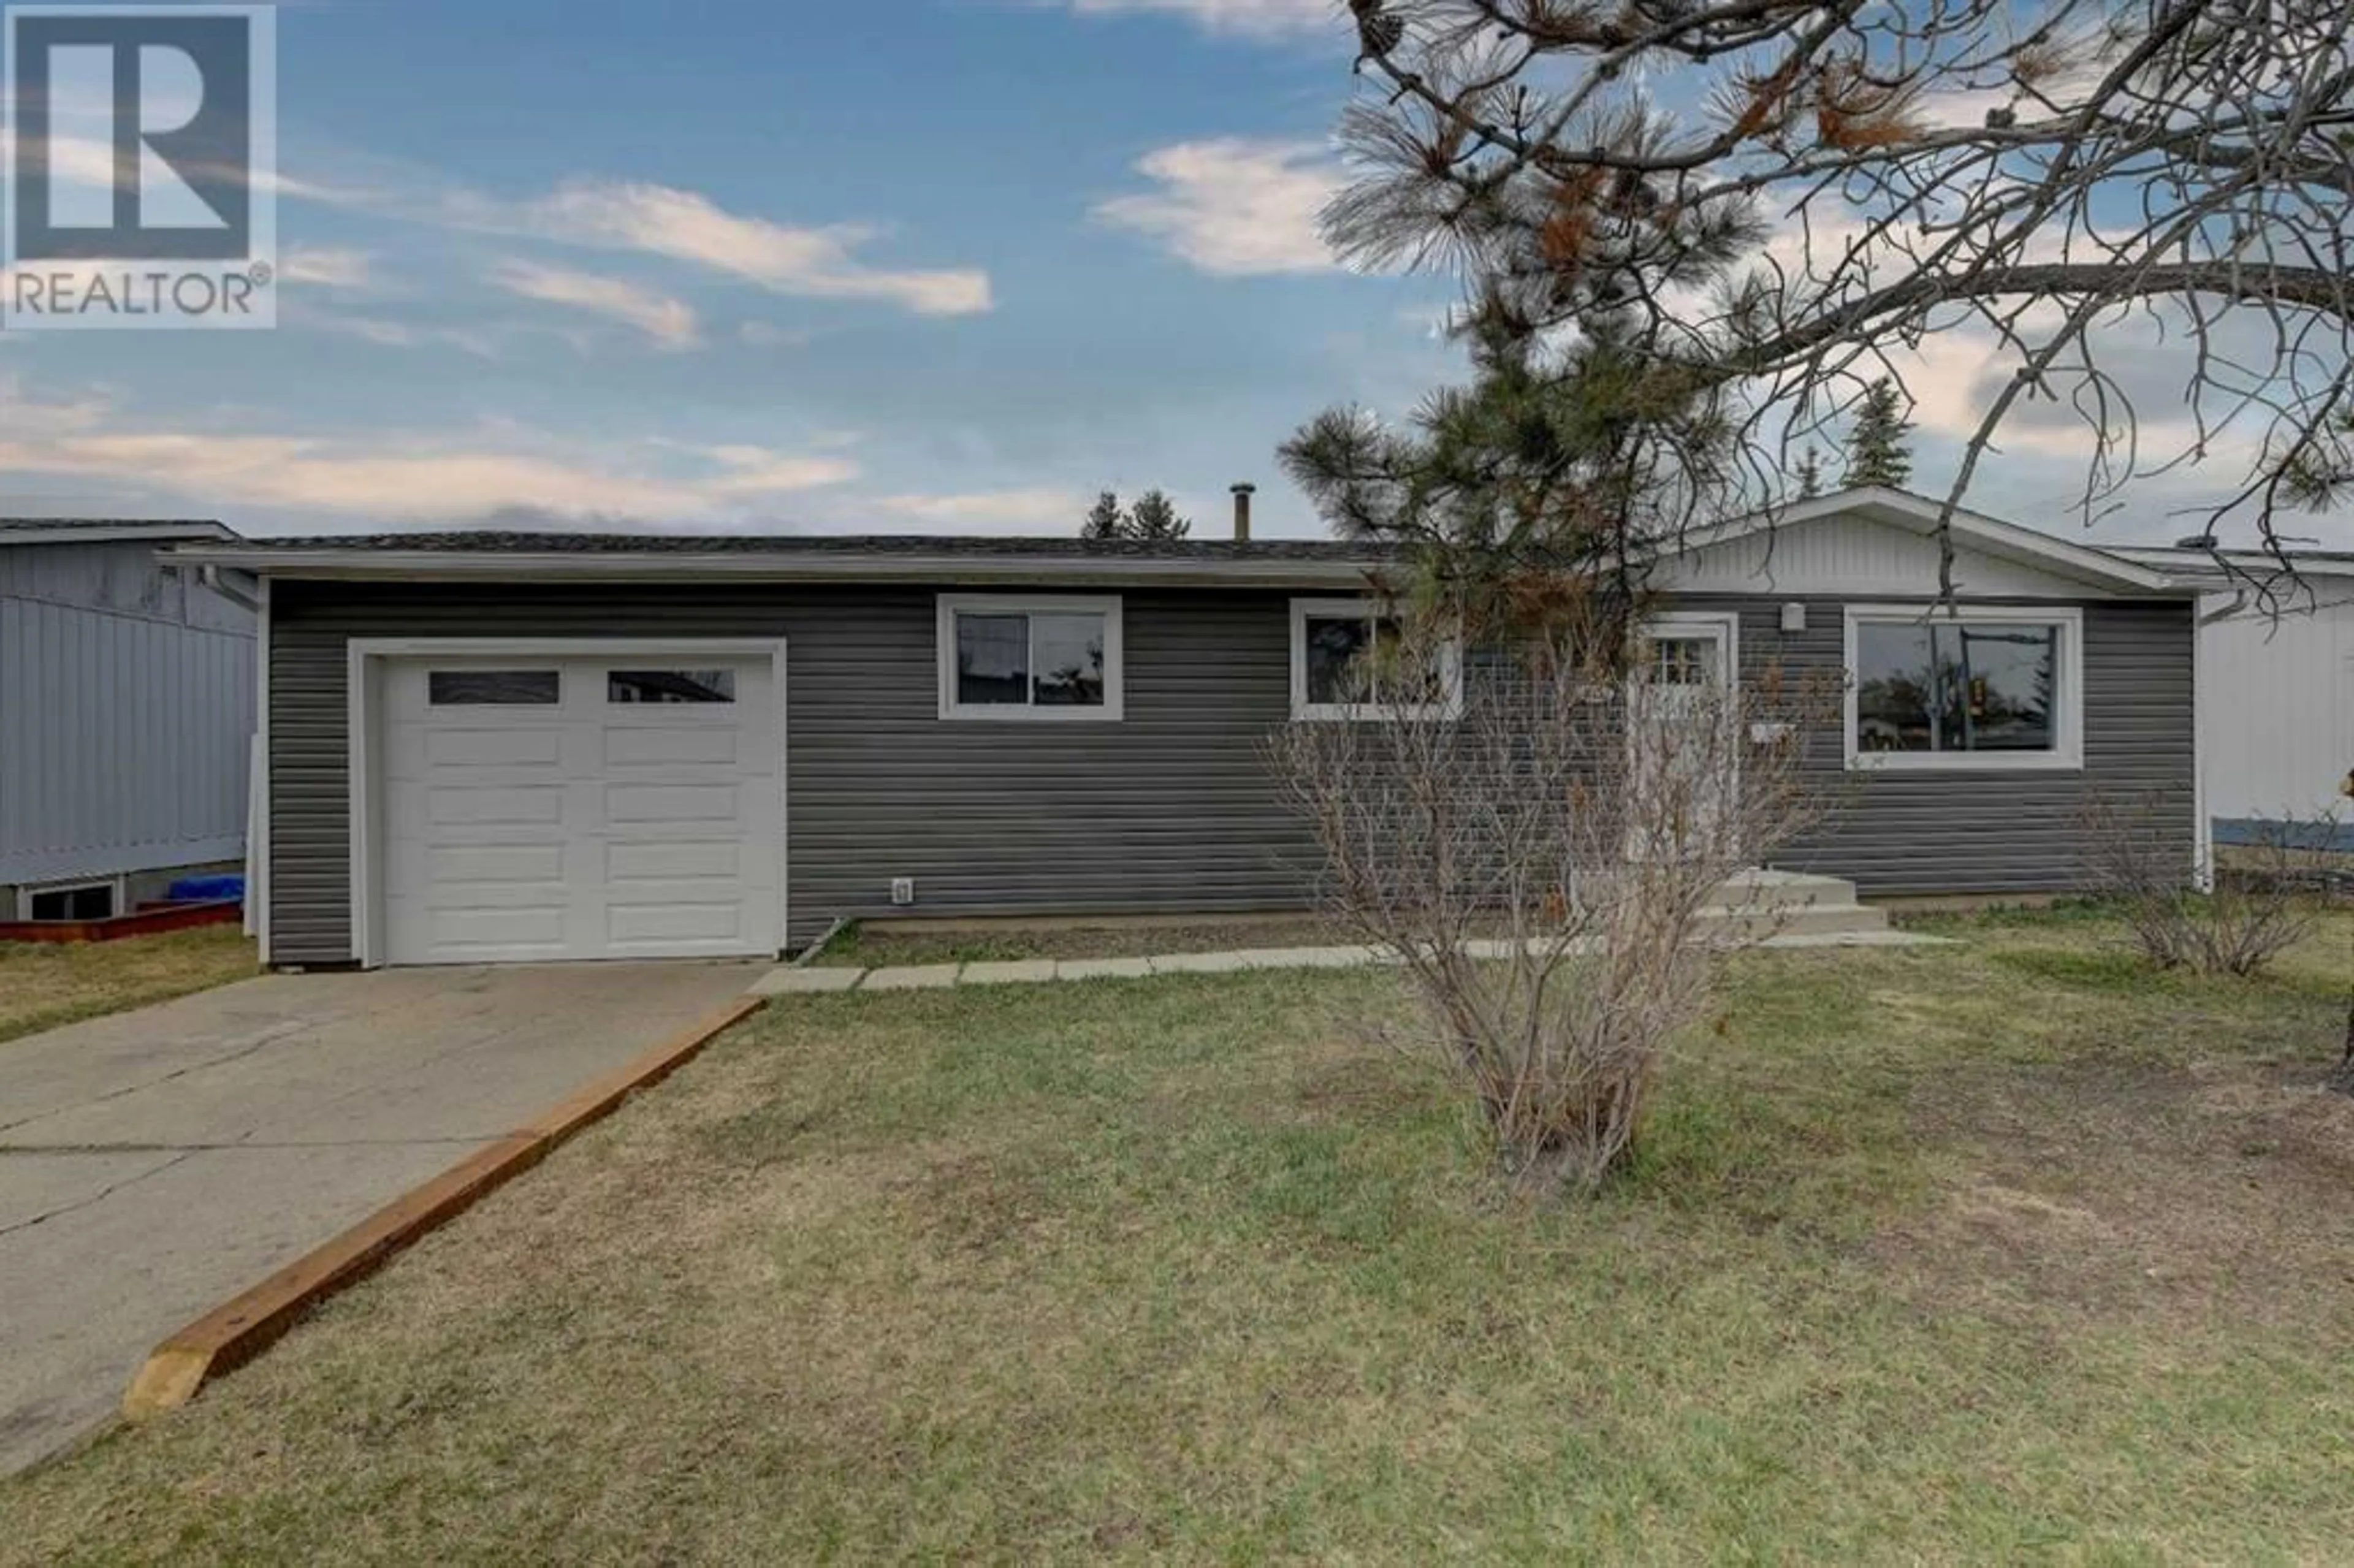 Home with vinyl exterior material for 11430 96 Street, Grande Prairie Alberta T8V2A5